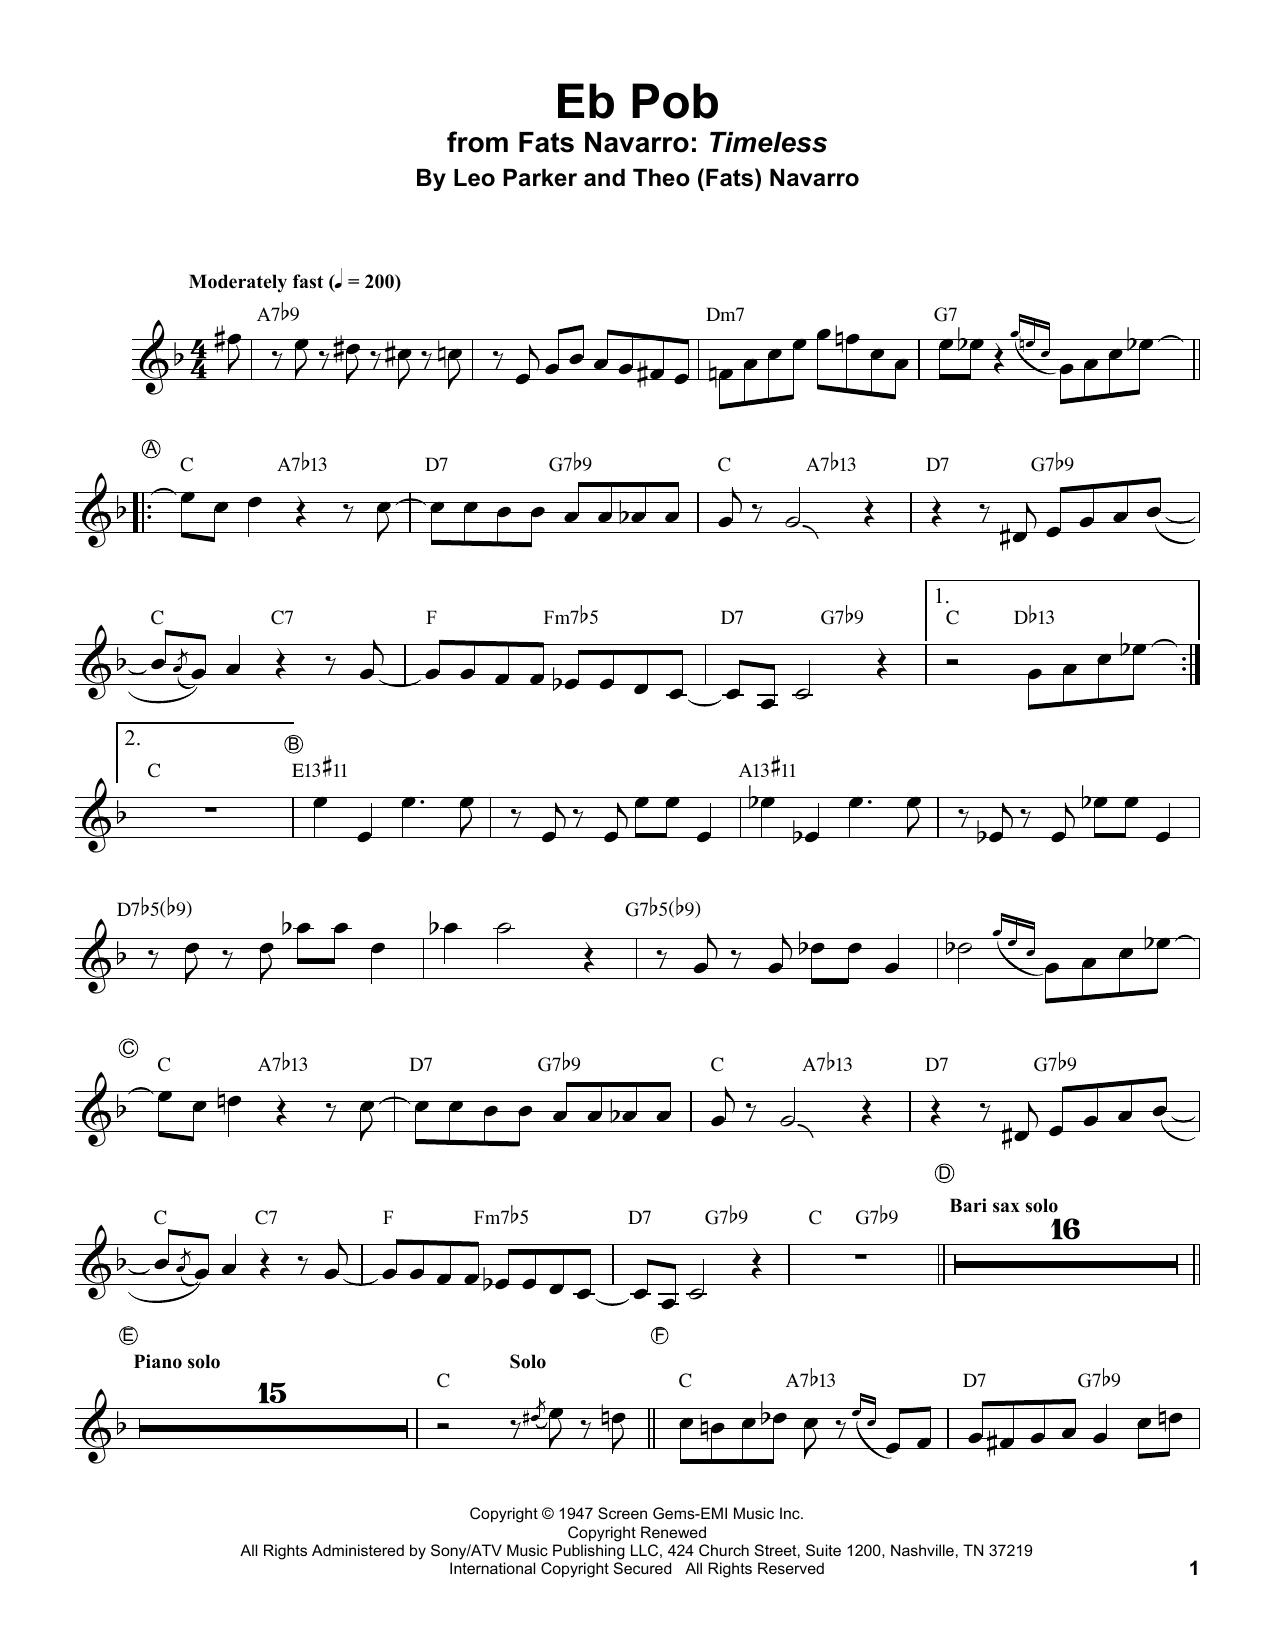 Fats Navarro Eb Pob Sheet Music Notes & Chords for Trumpet Transcription - Download or Print PDF